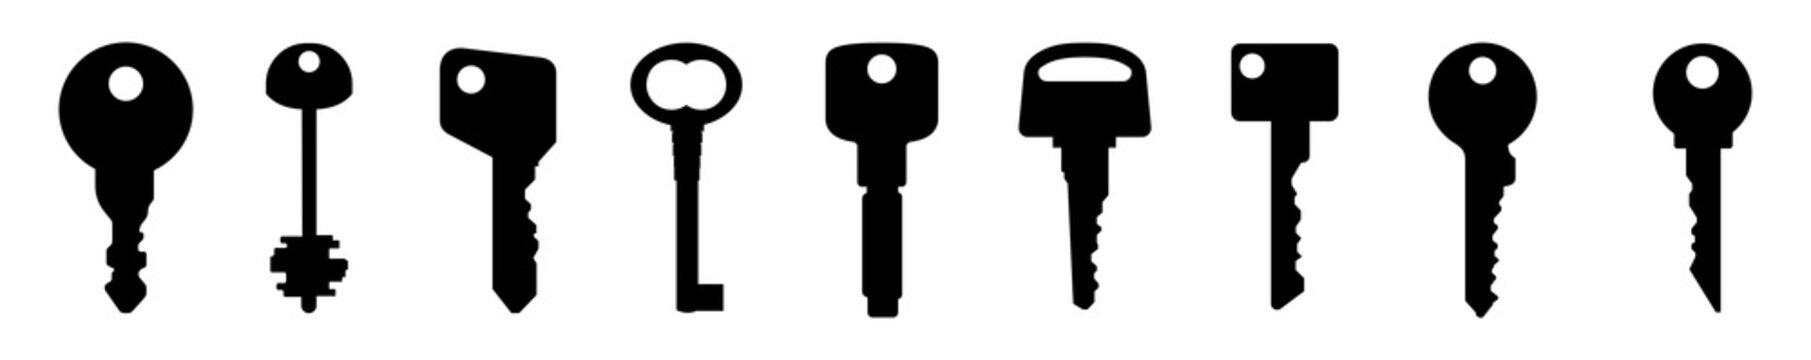 Set of black silhouettes of door keys. Key icon set.Vintage key antique door key isolated on white background. Keys and padlock silhouette. Vector illustration.